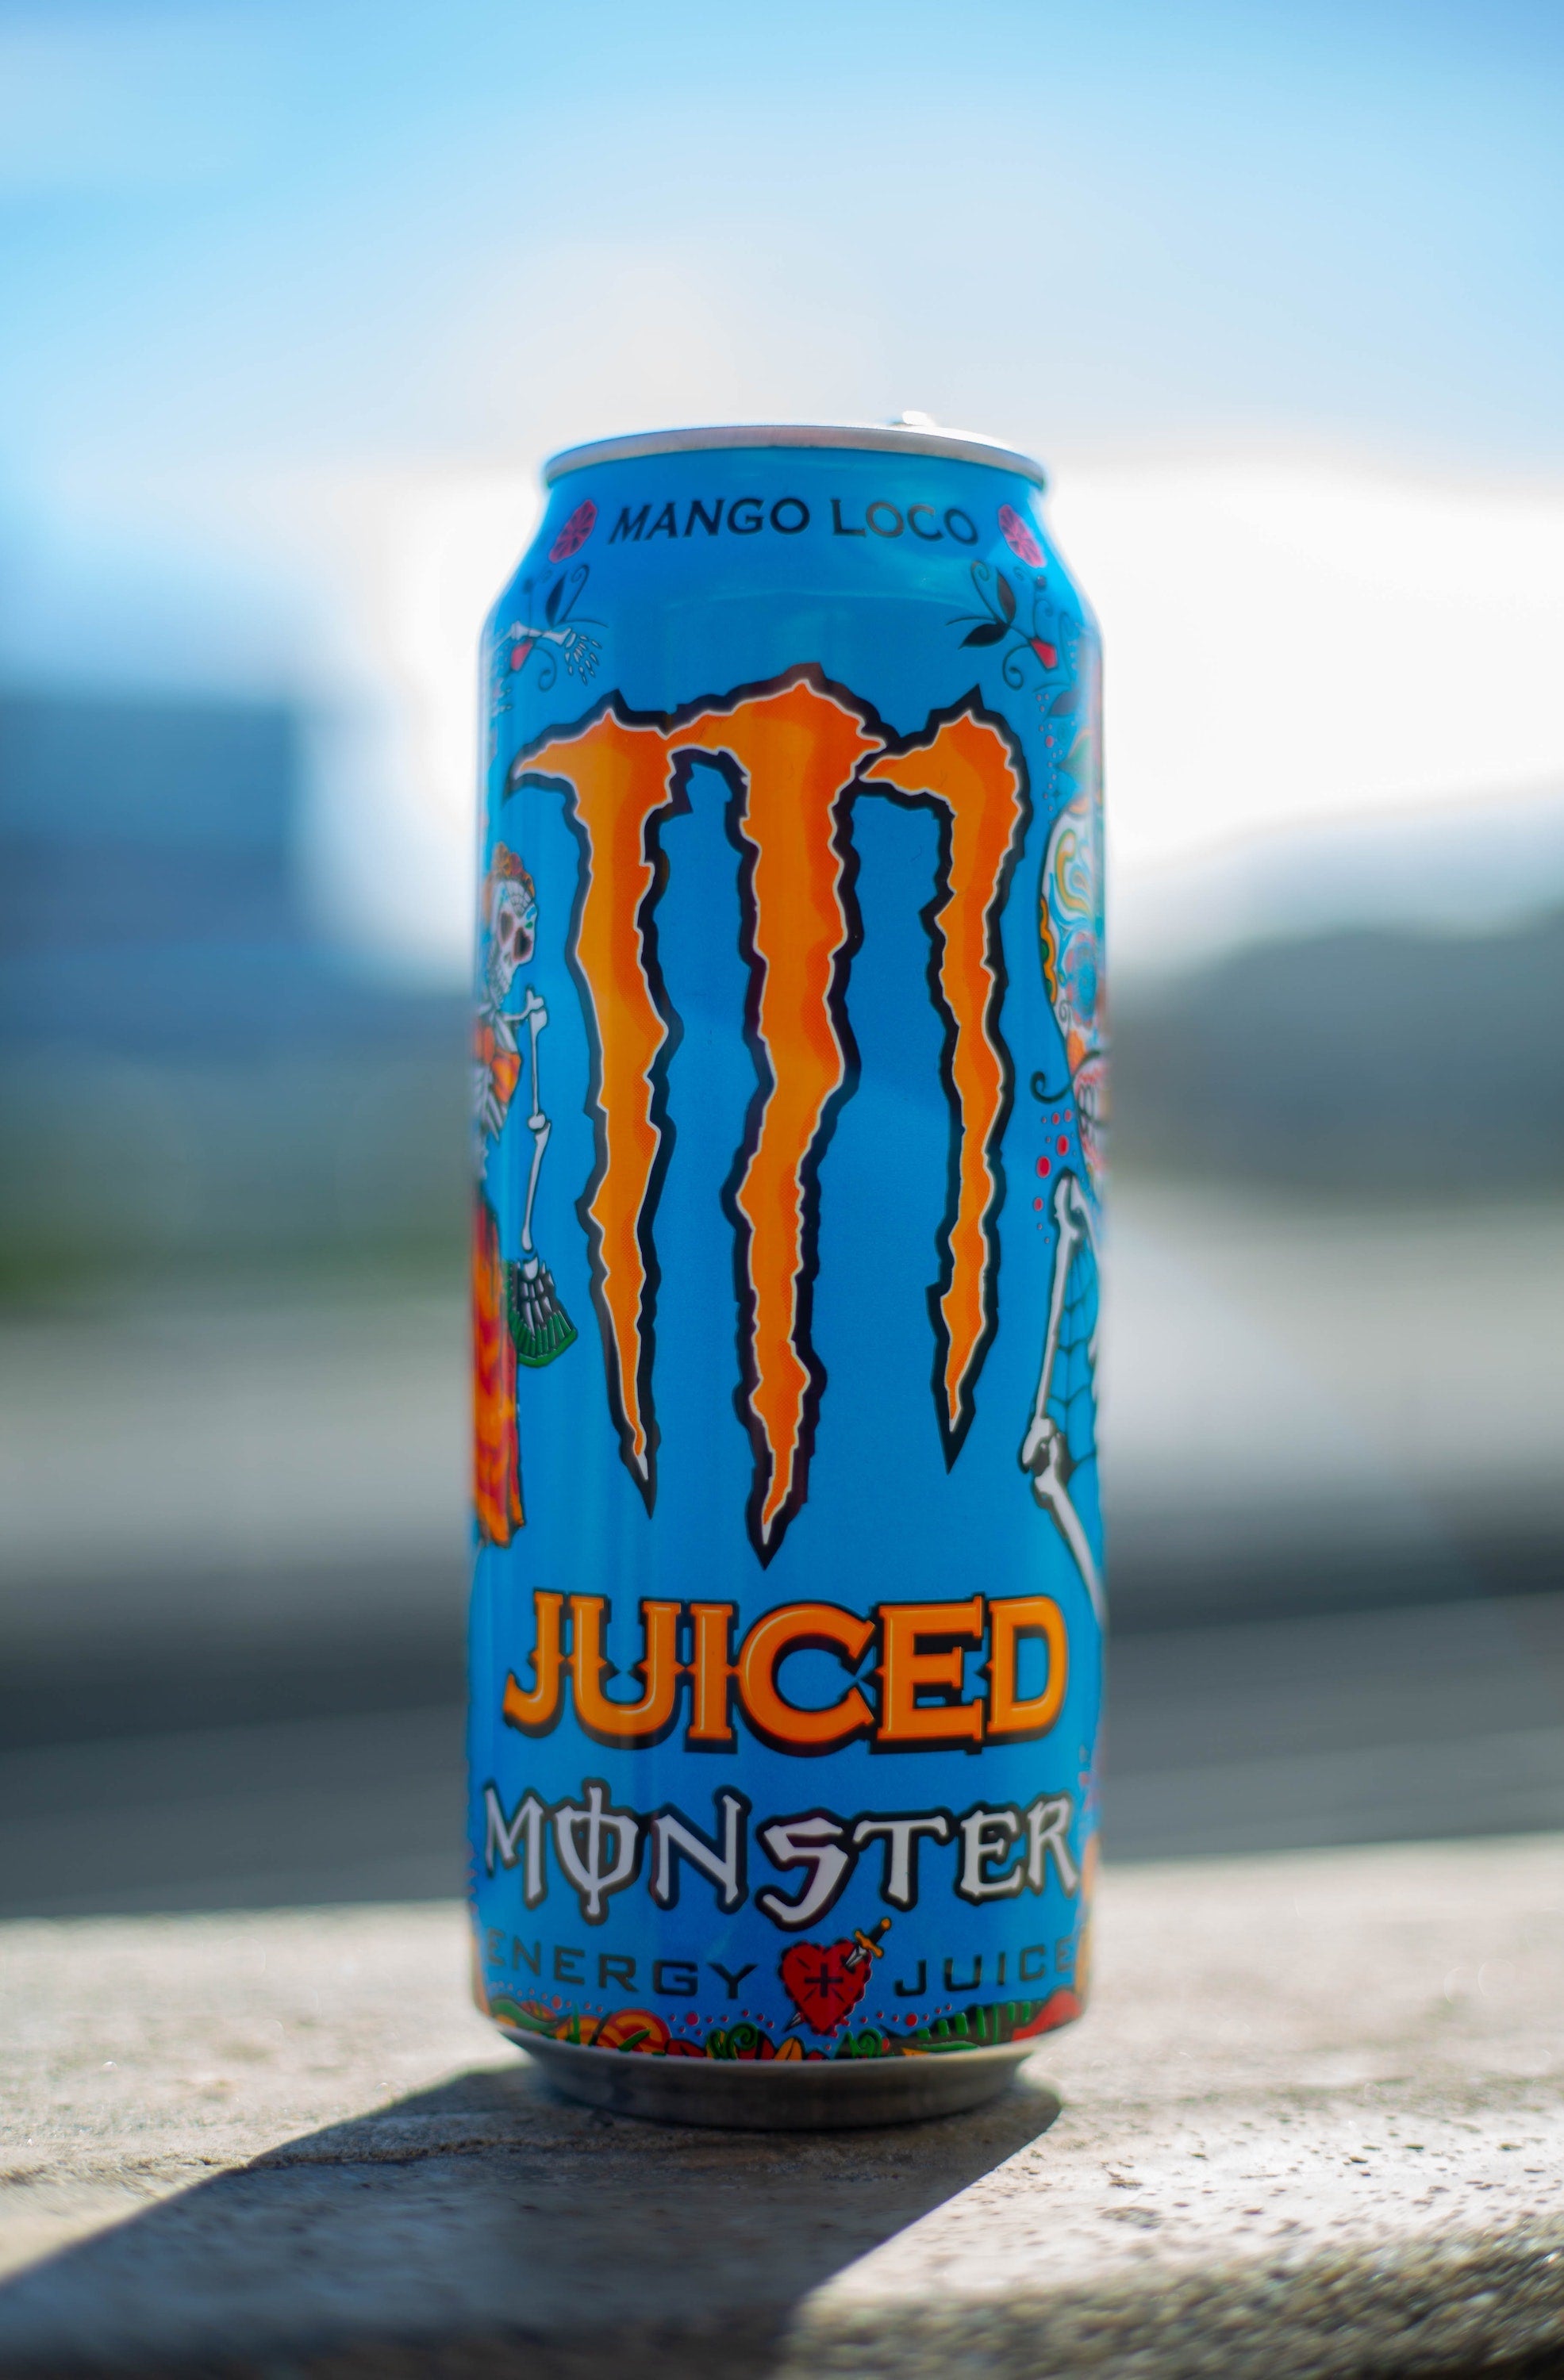 Refreshing Wholesale Monster Energy Drink for All 